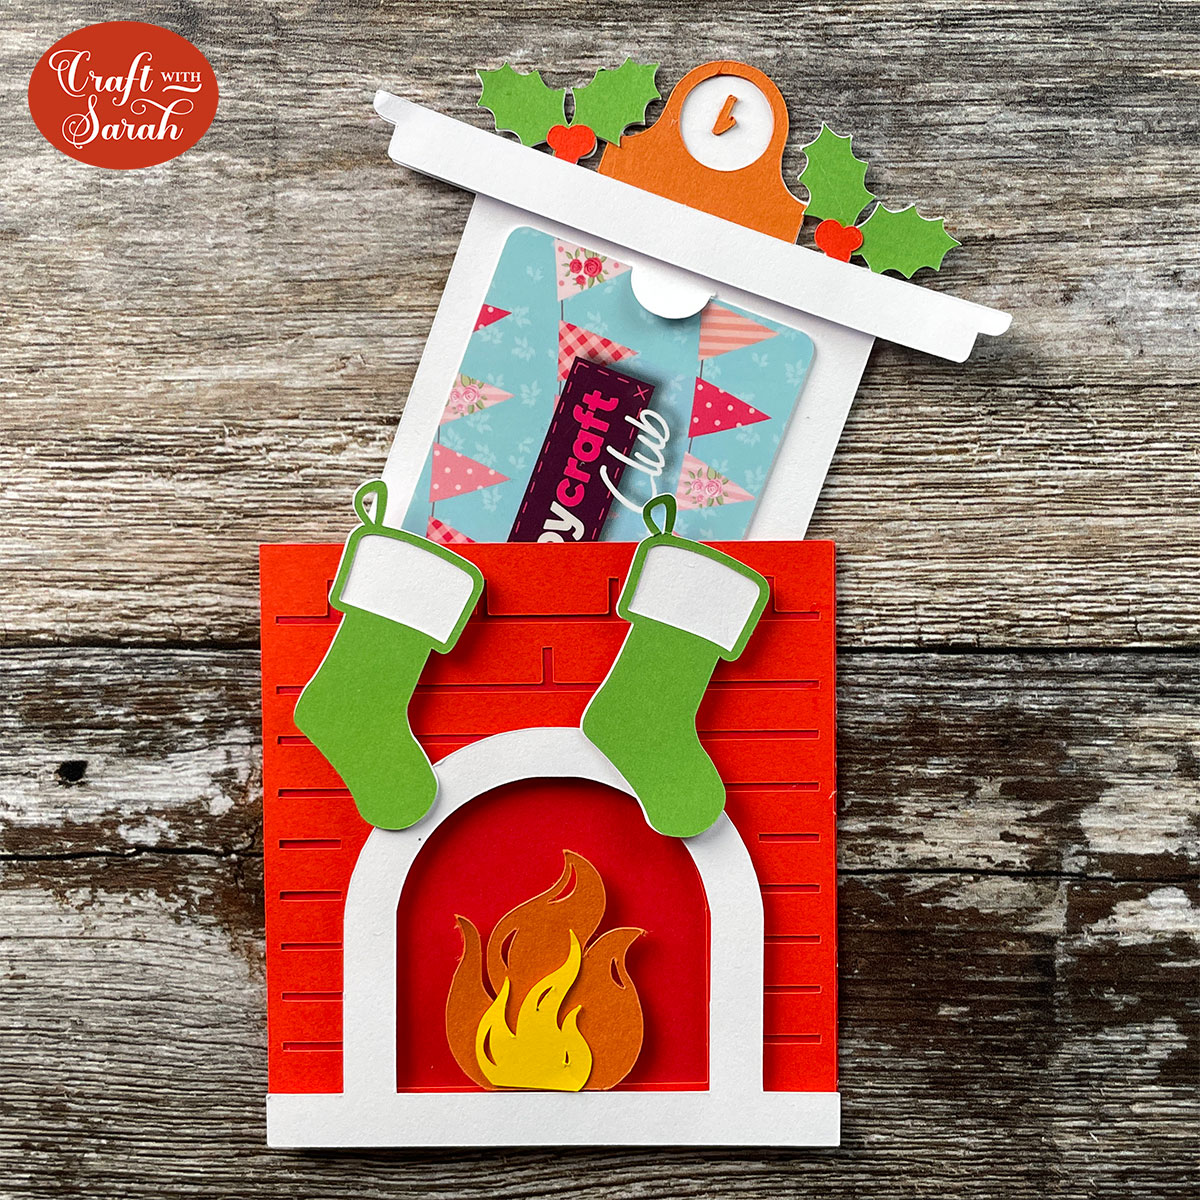 DIY Gift Card Holder 💰 Make a Christmas Gift Card Wallet - Craft